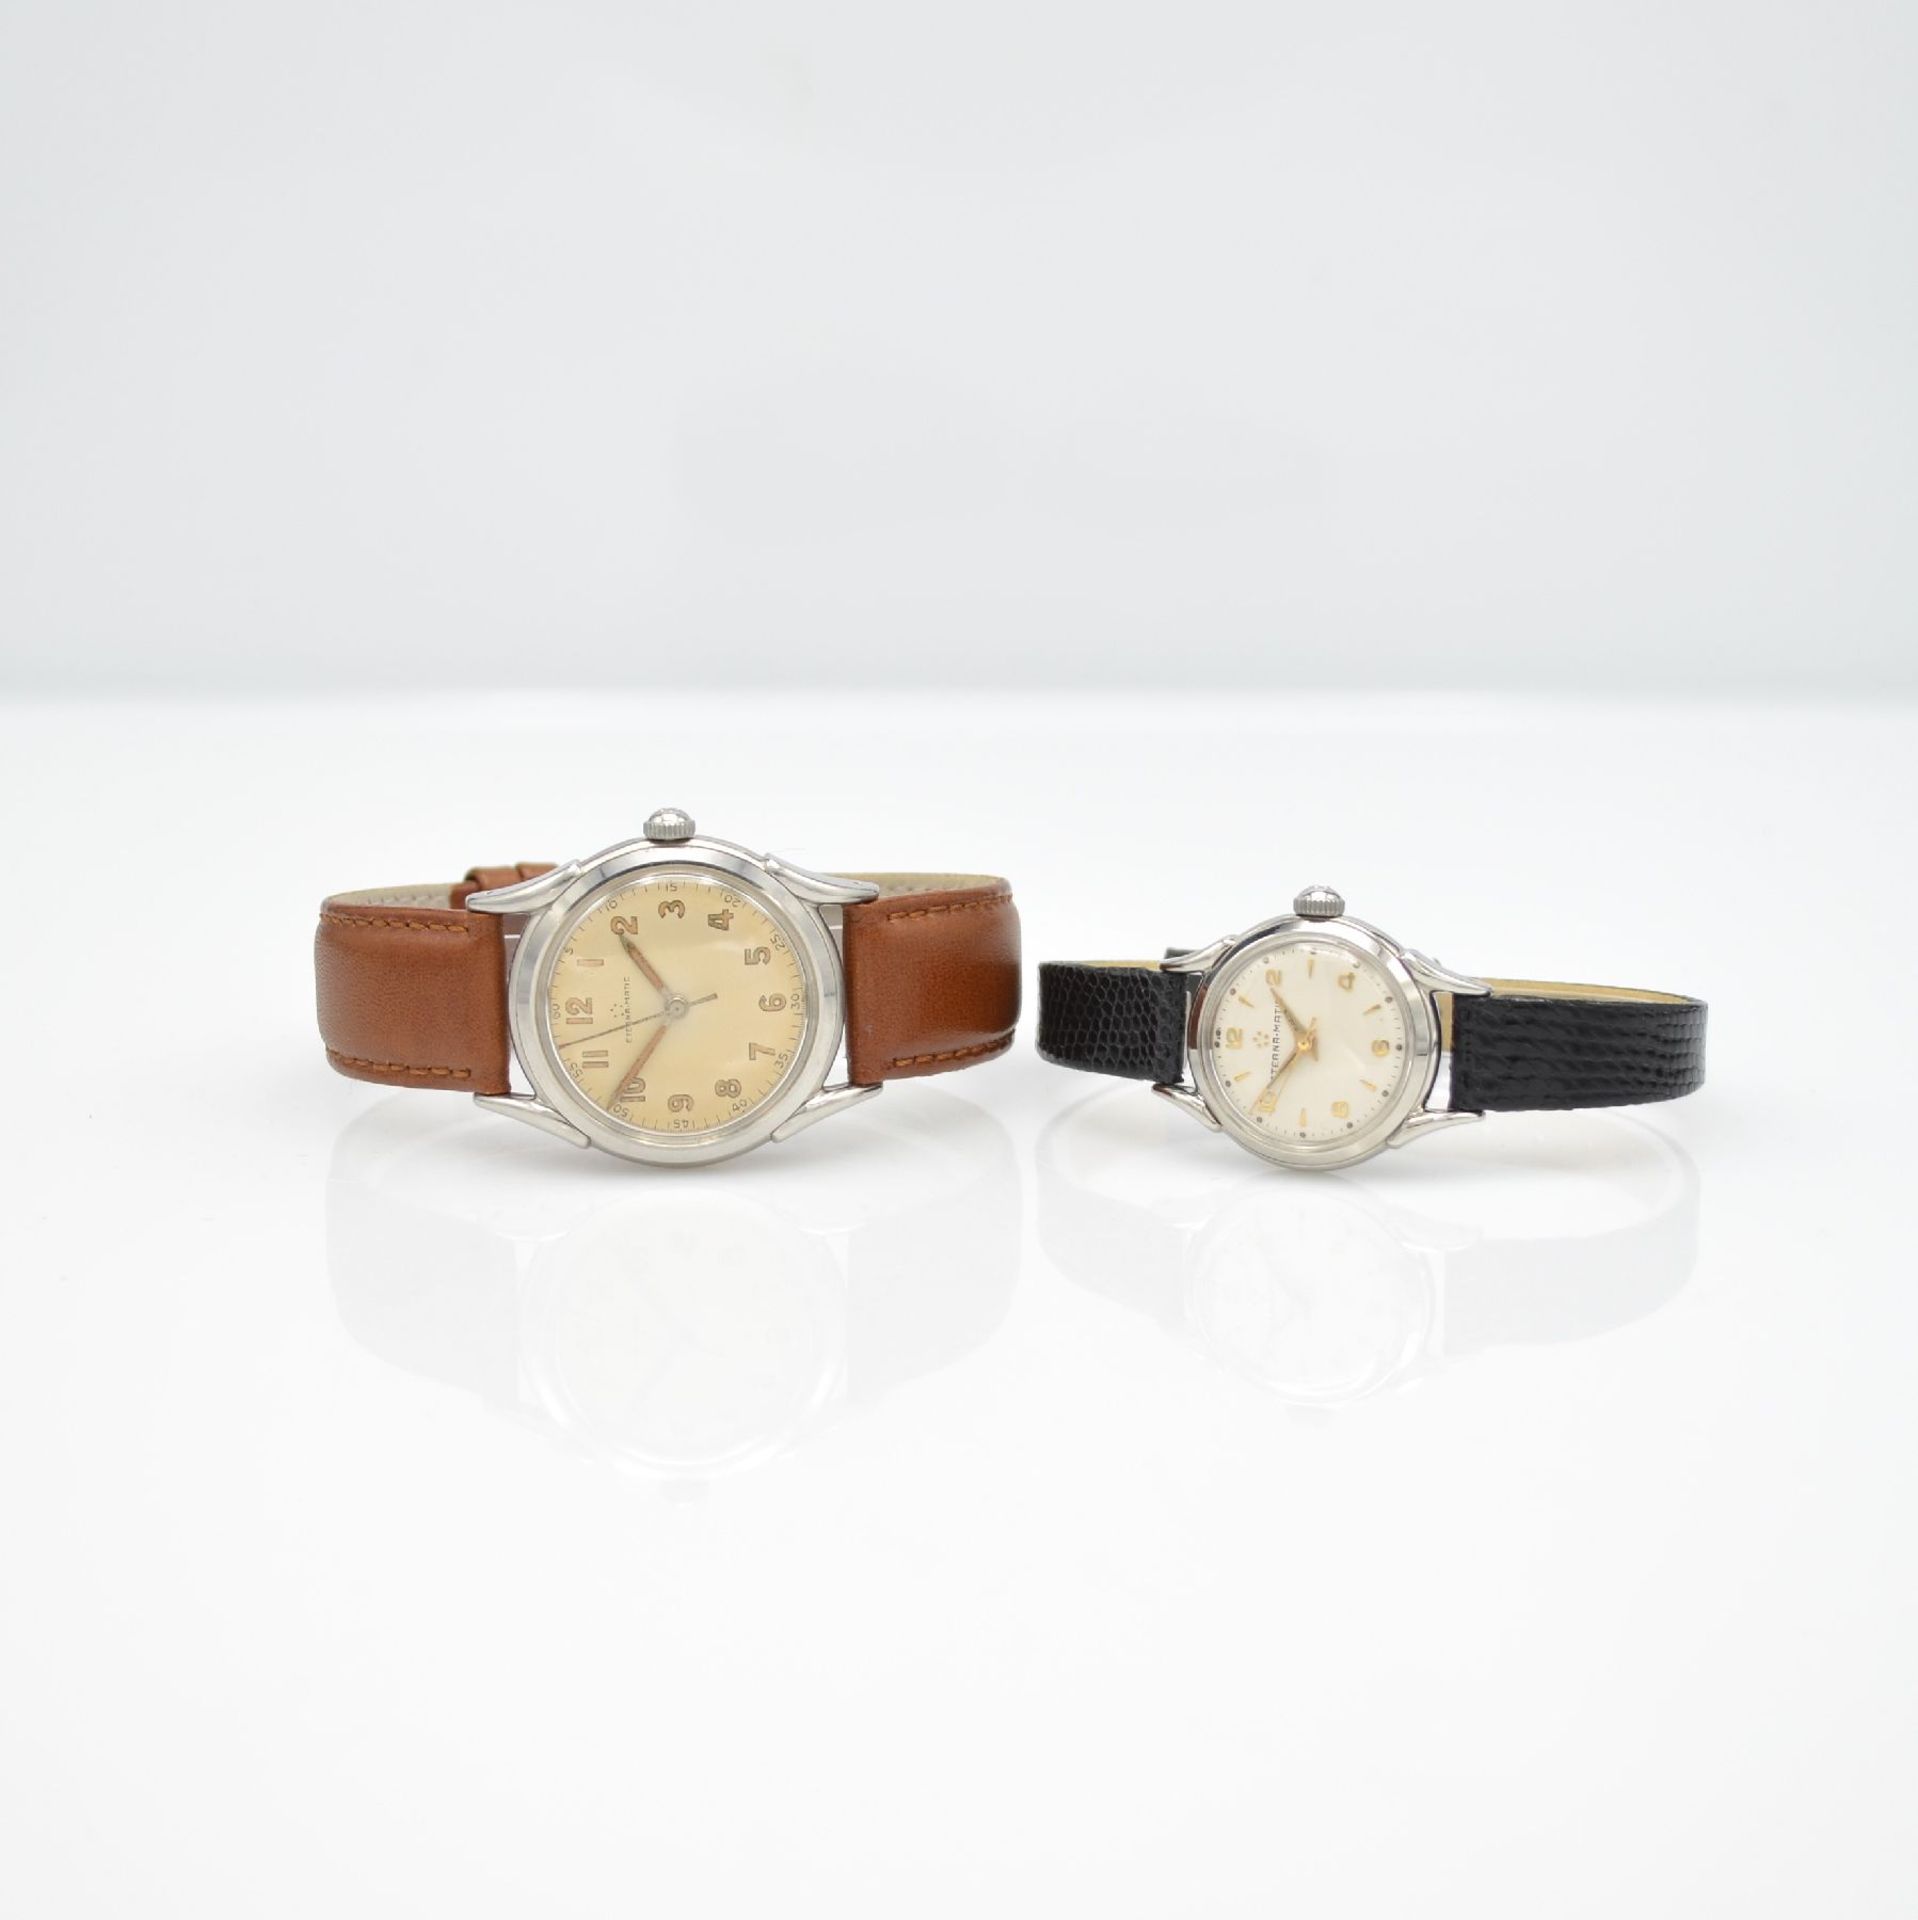 ETERNA-MATIC 2 wristwatches in steel, Switzerland around 1950, screwed down cases with unusual lugs,